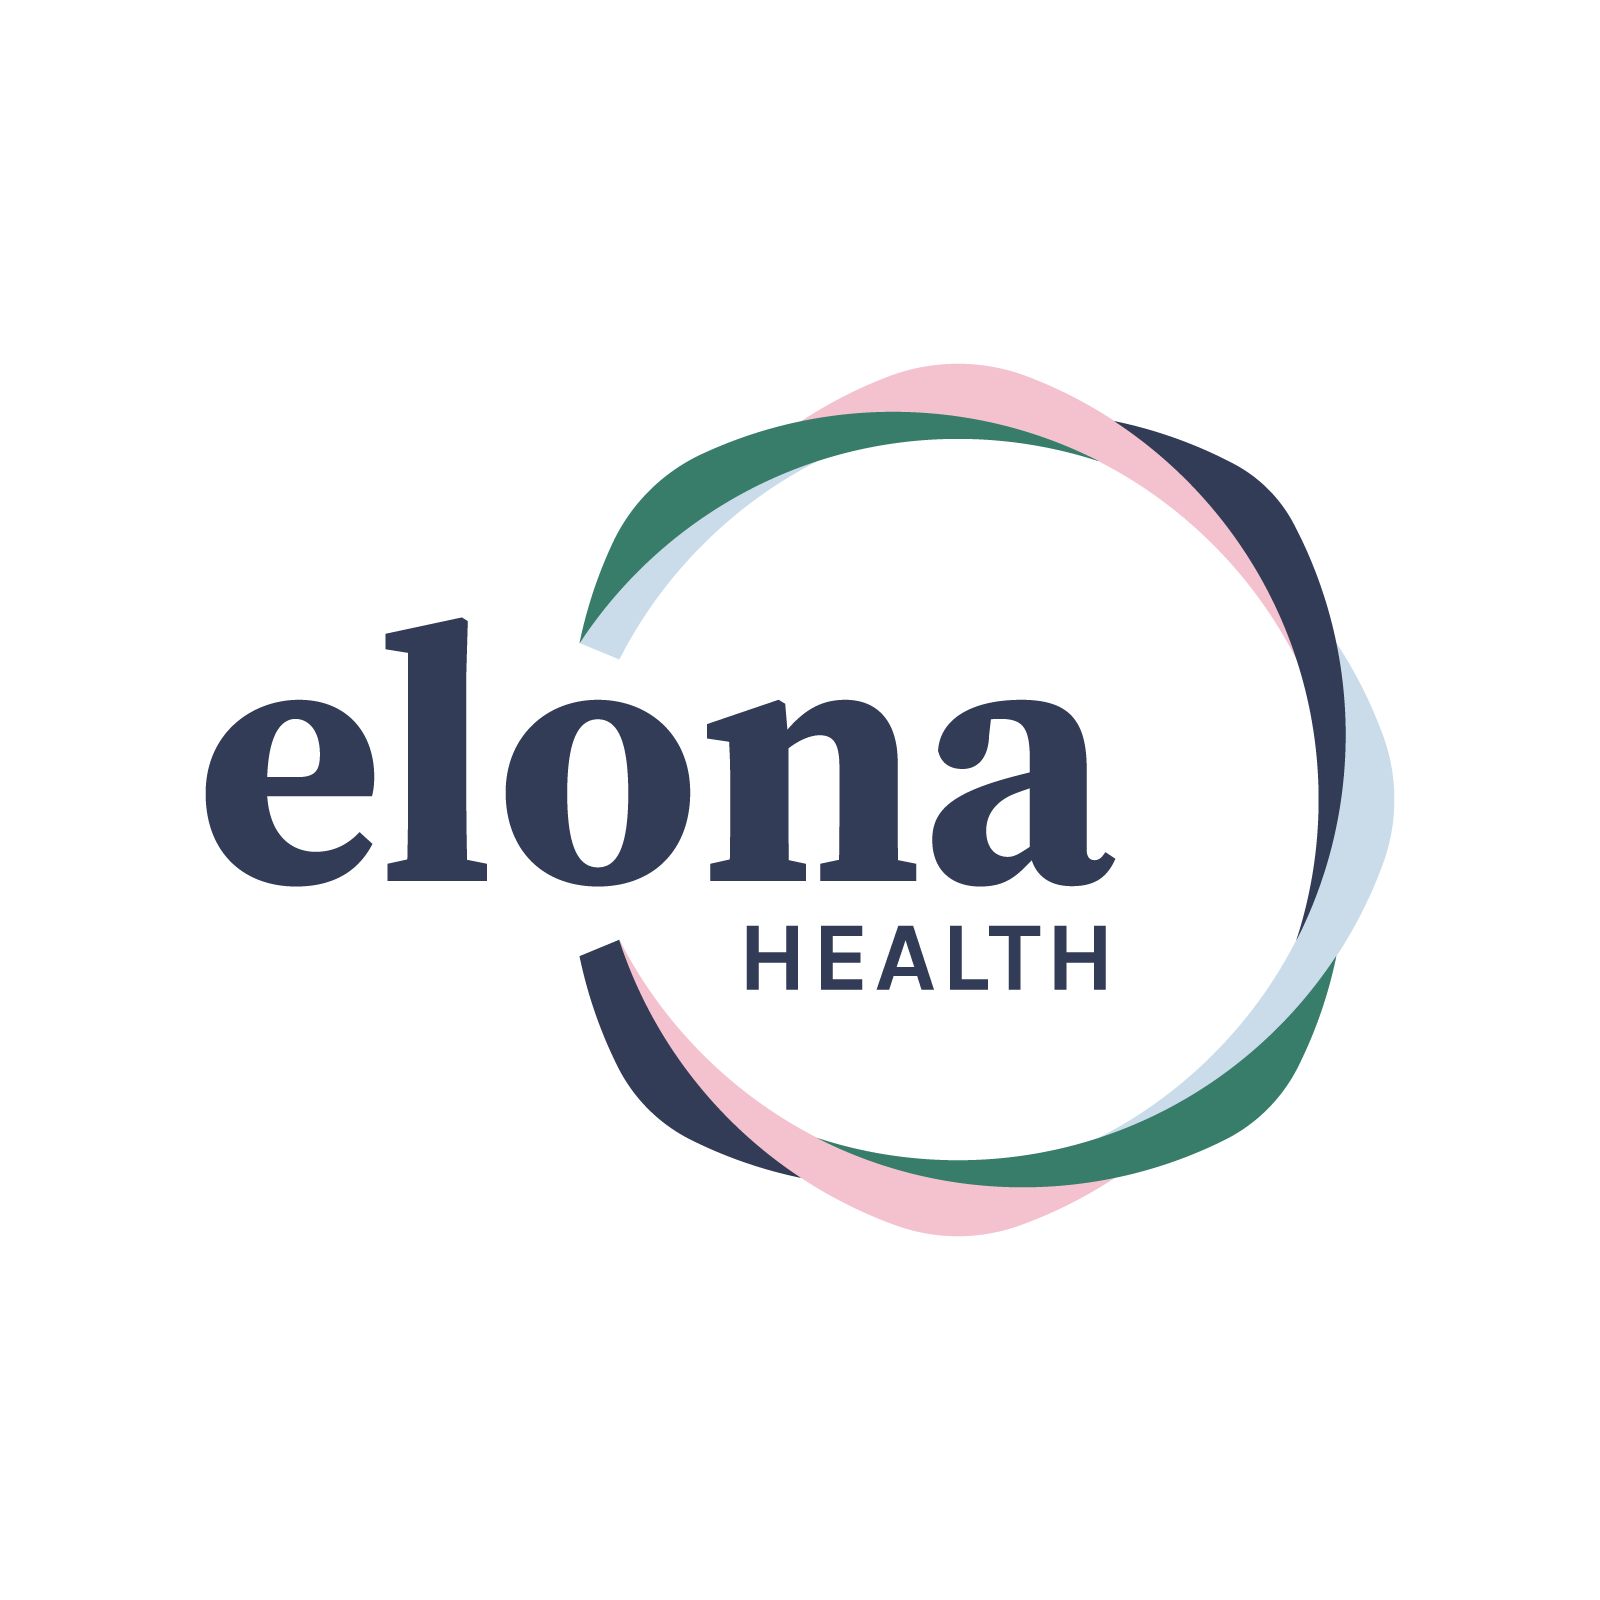 Elona Health